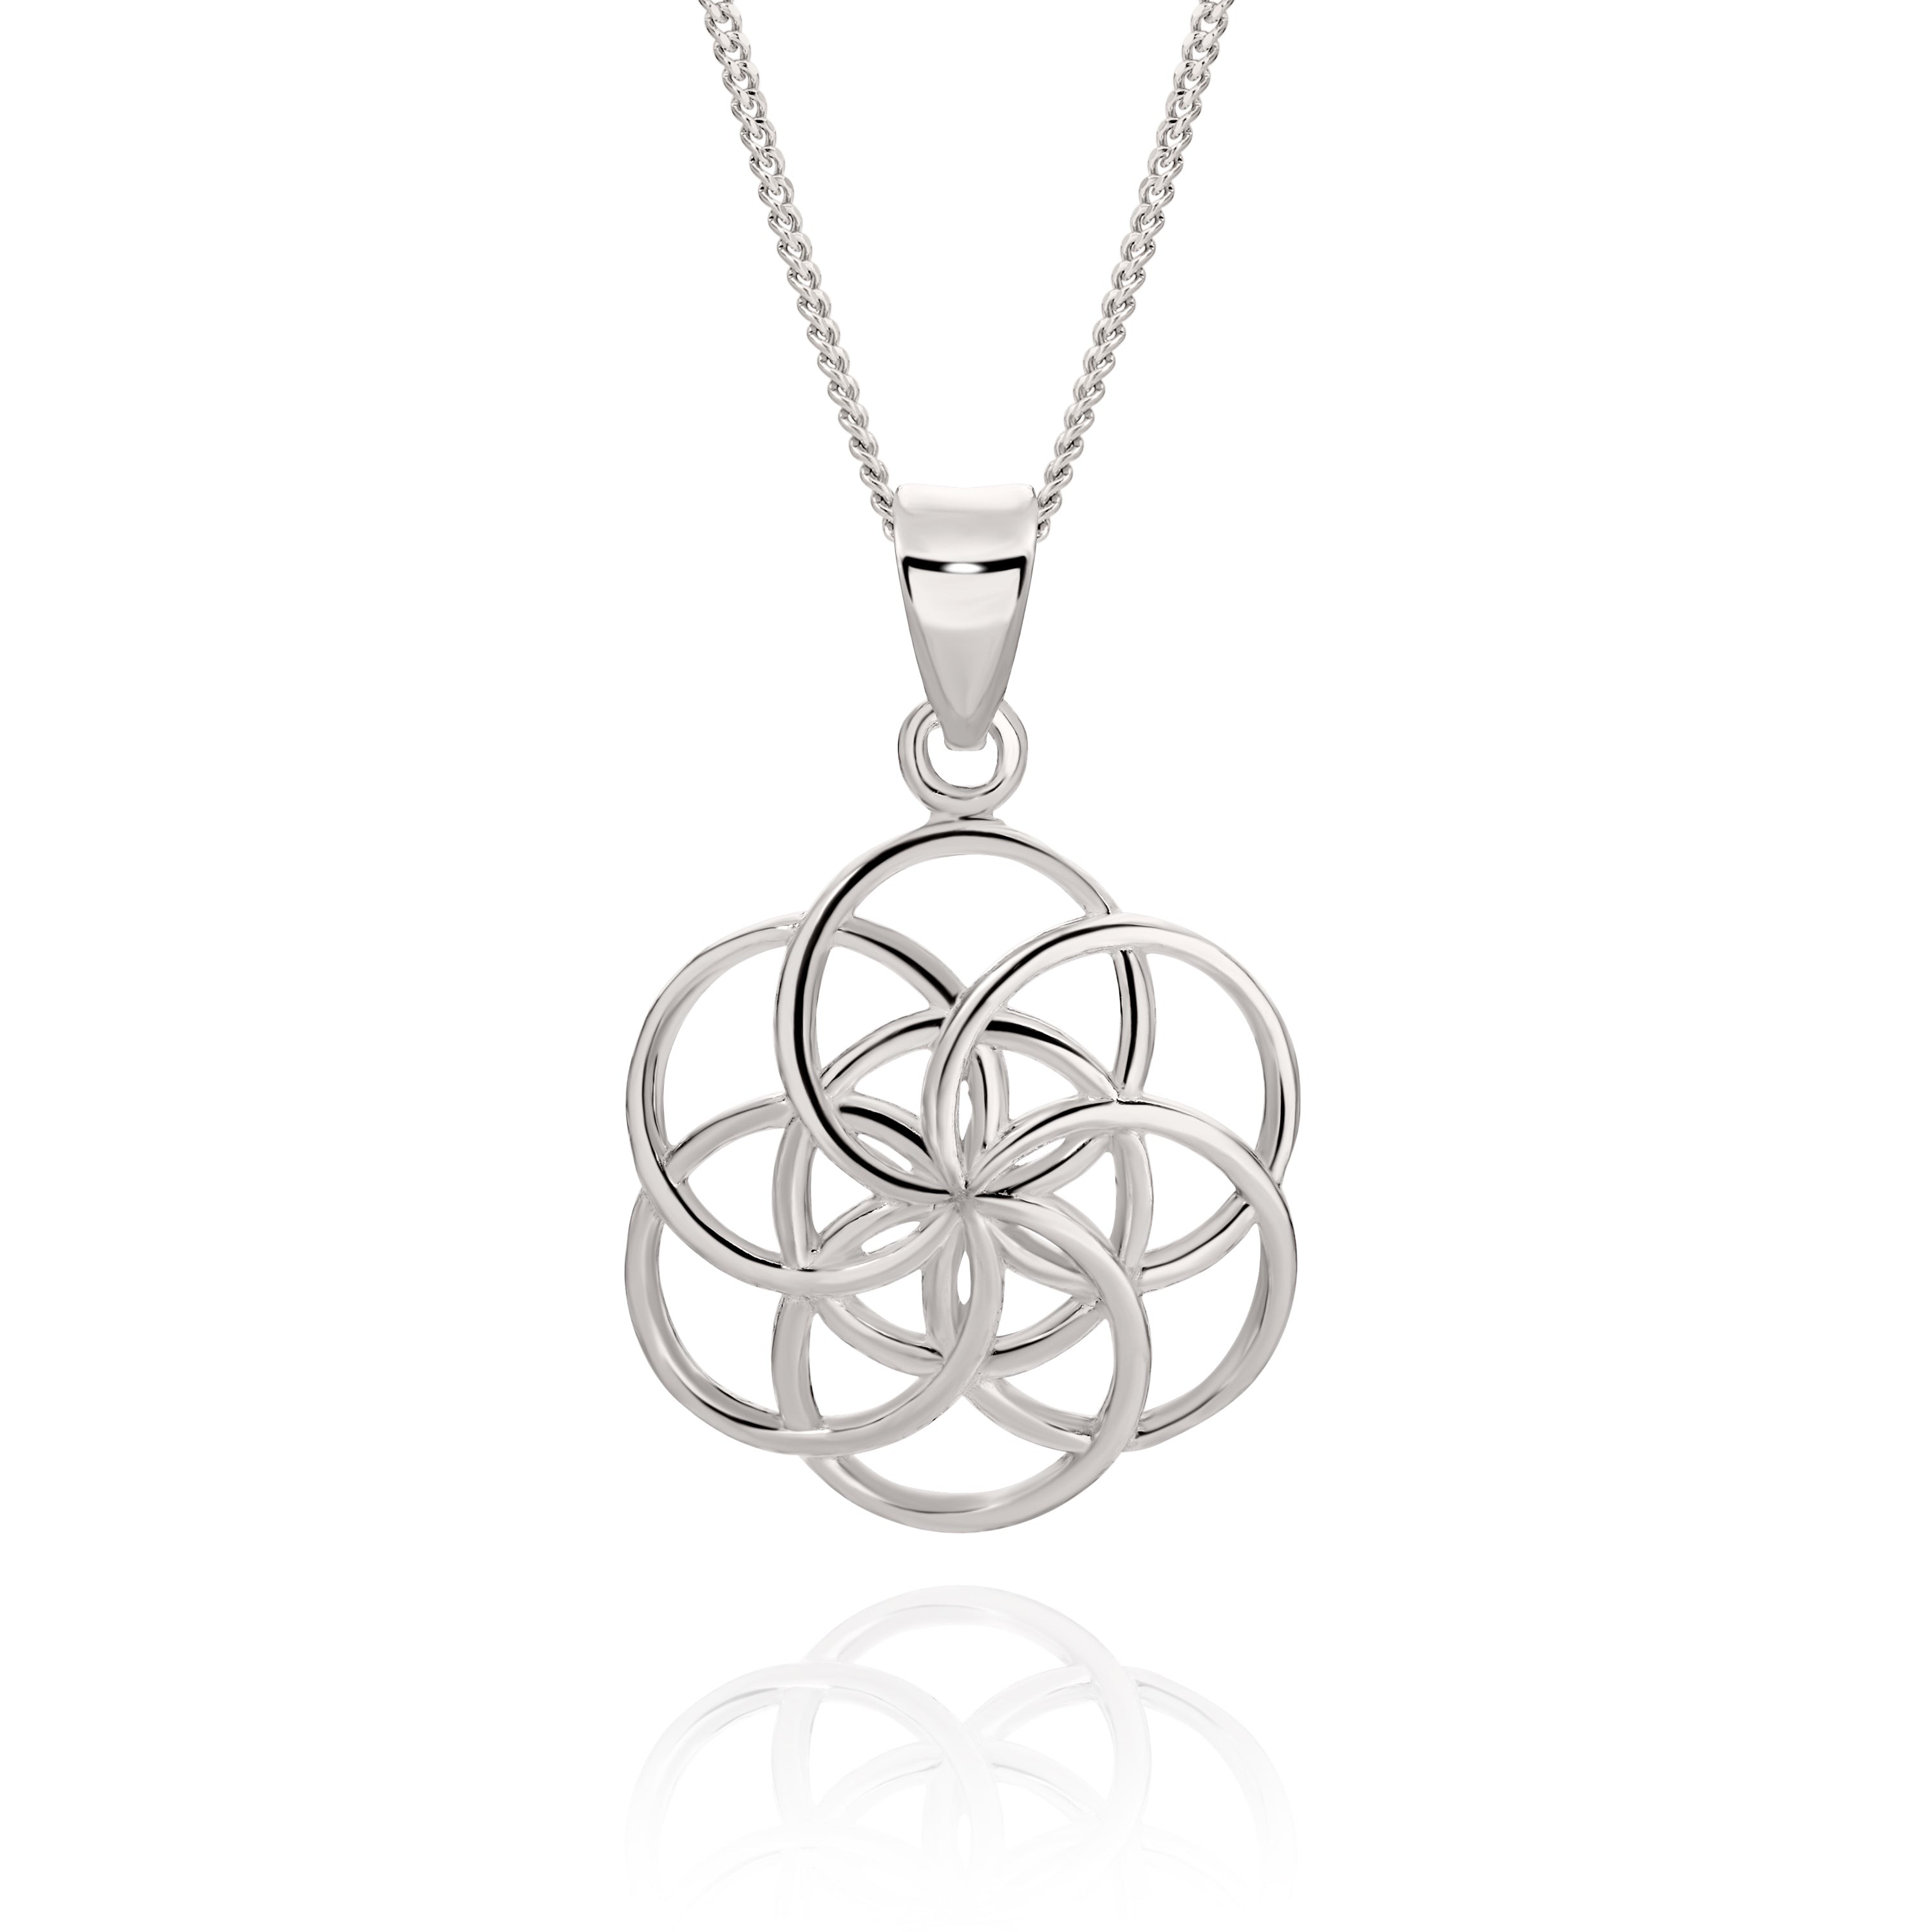 Silver interlocking circles pendant